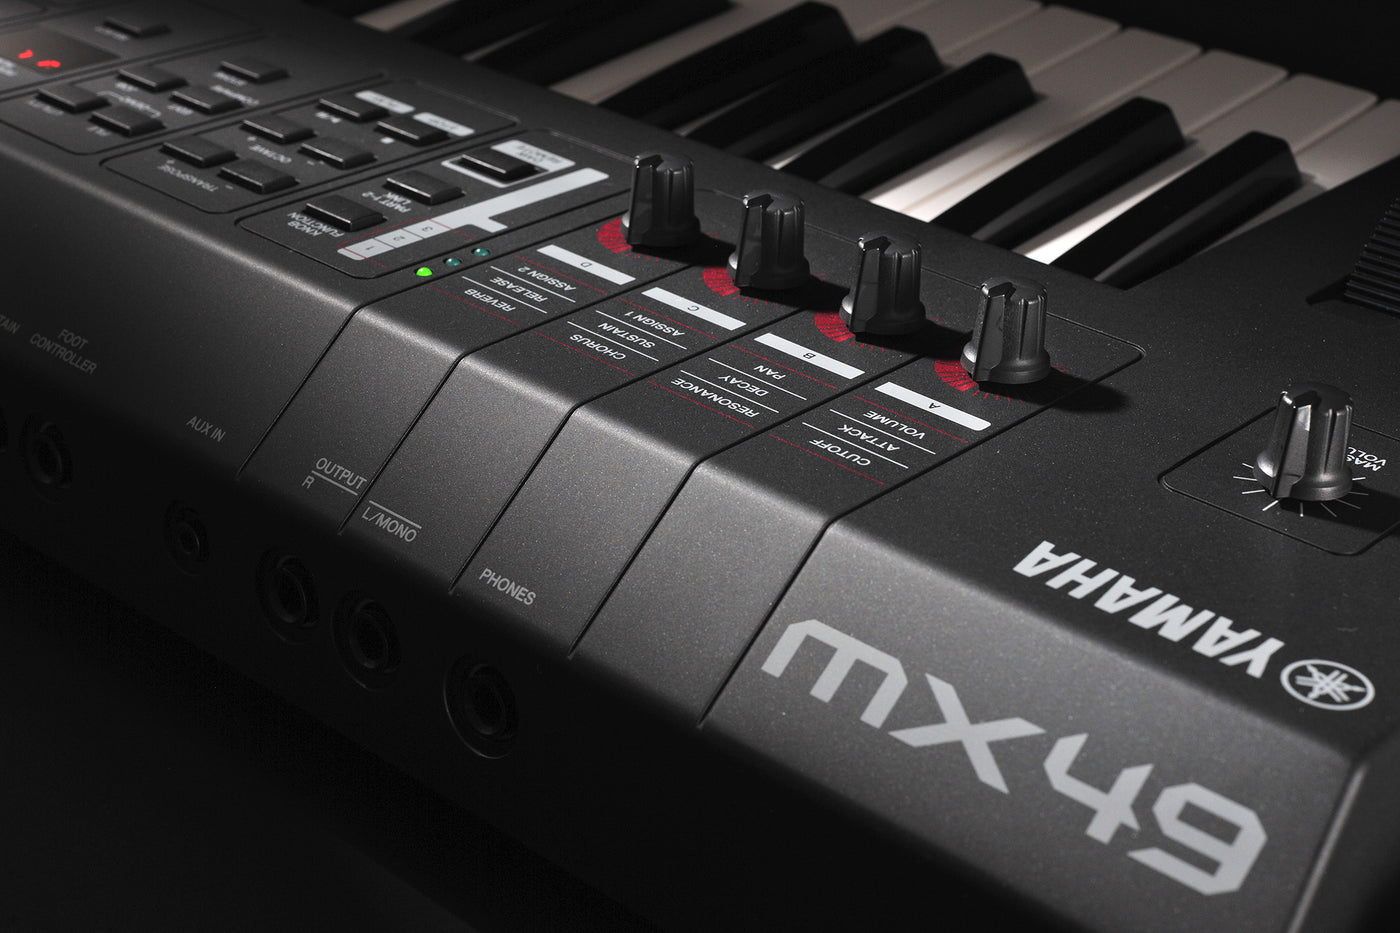 close-up photo of a yamaha mx49 music synthesizer keyboard, showcasing the control panel and keys.